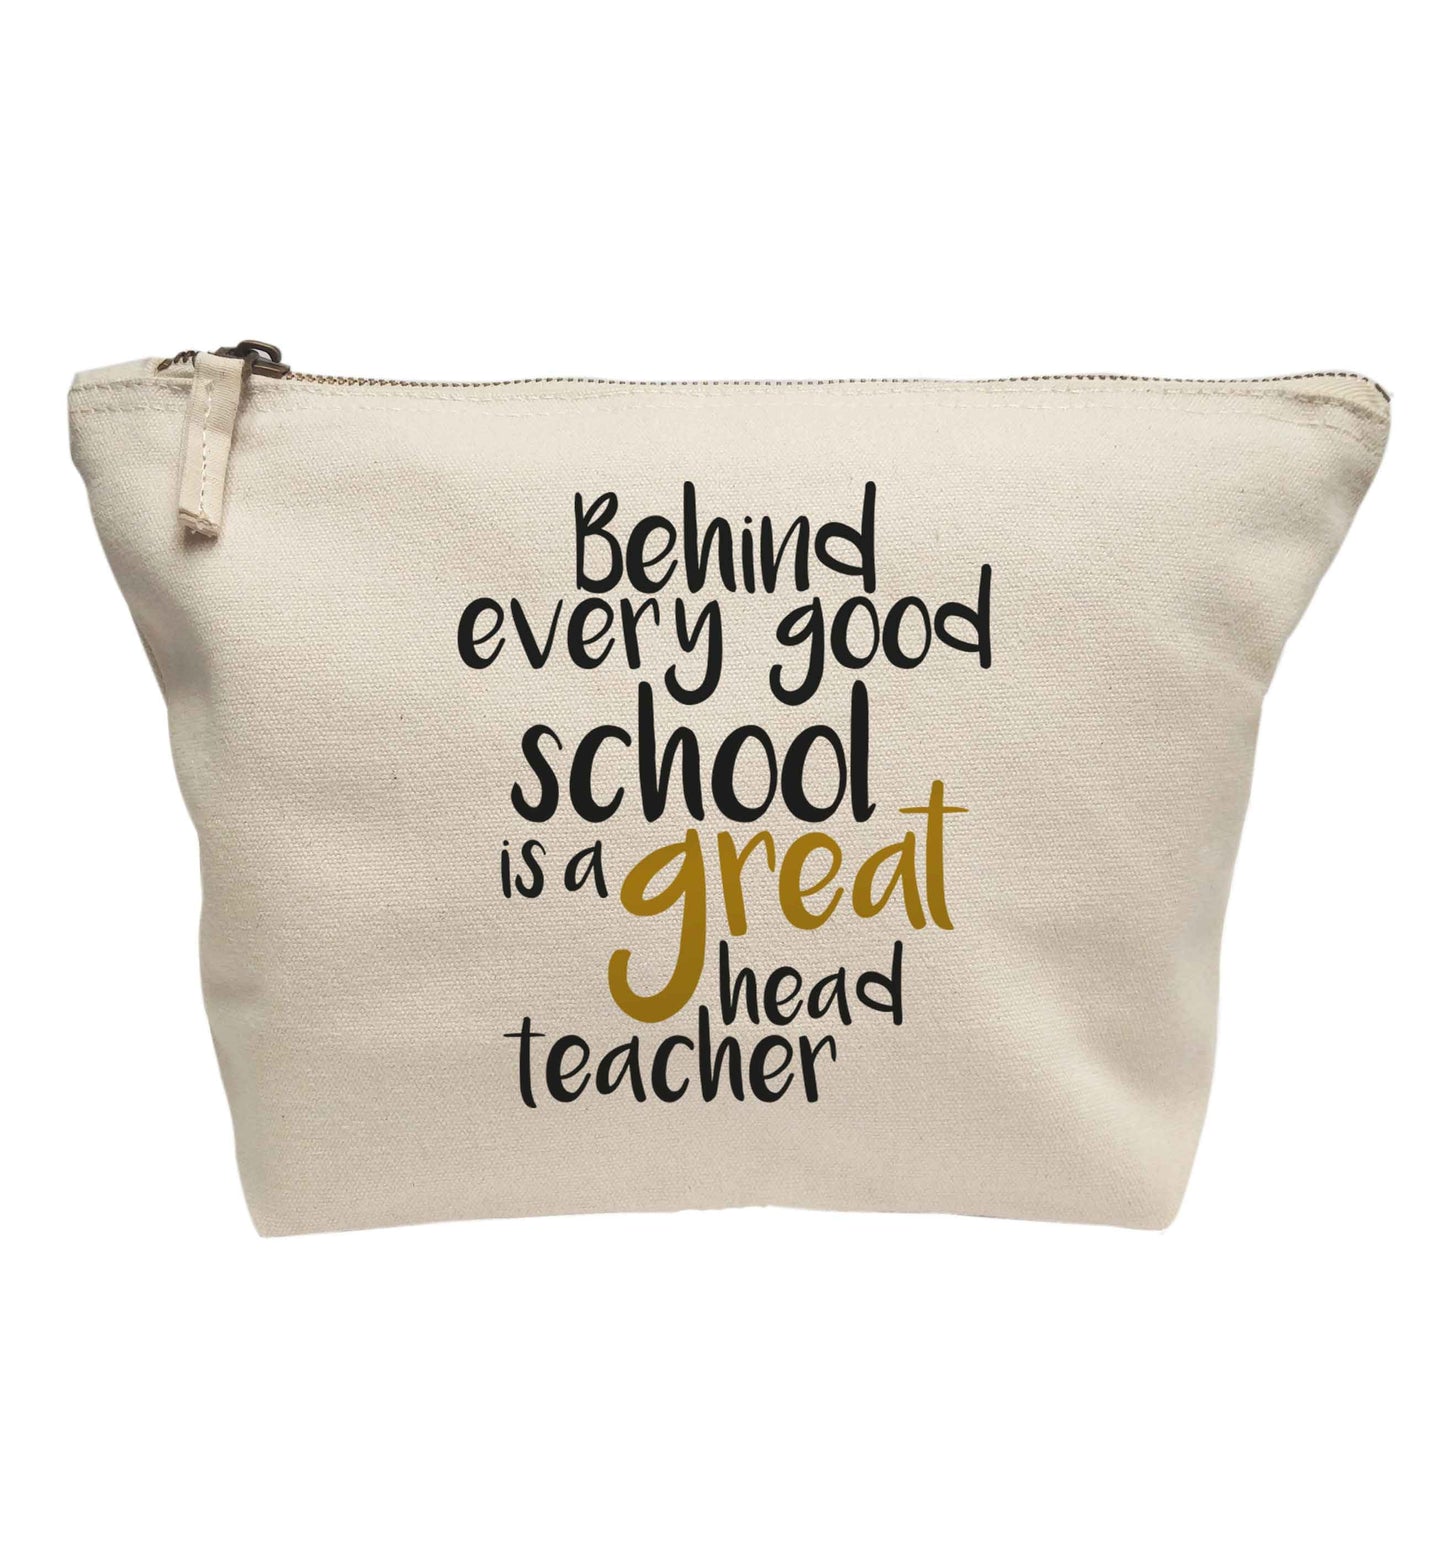 Behind every good school is a great head teacher | Makeup / wash bag